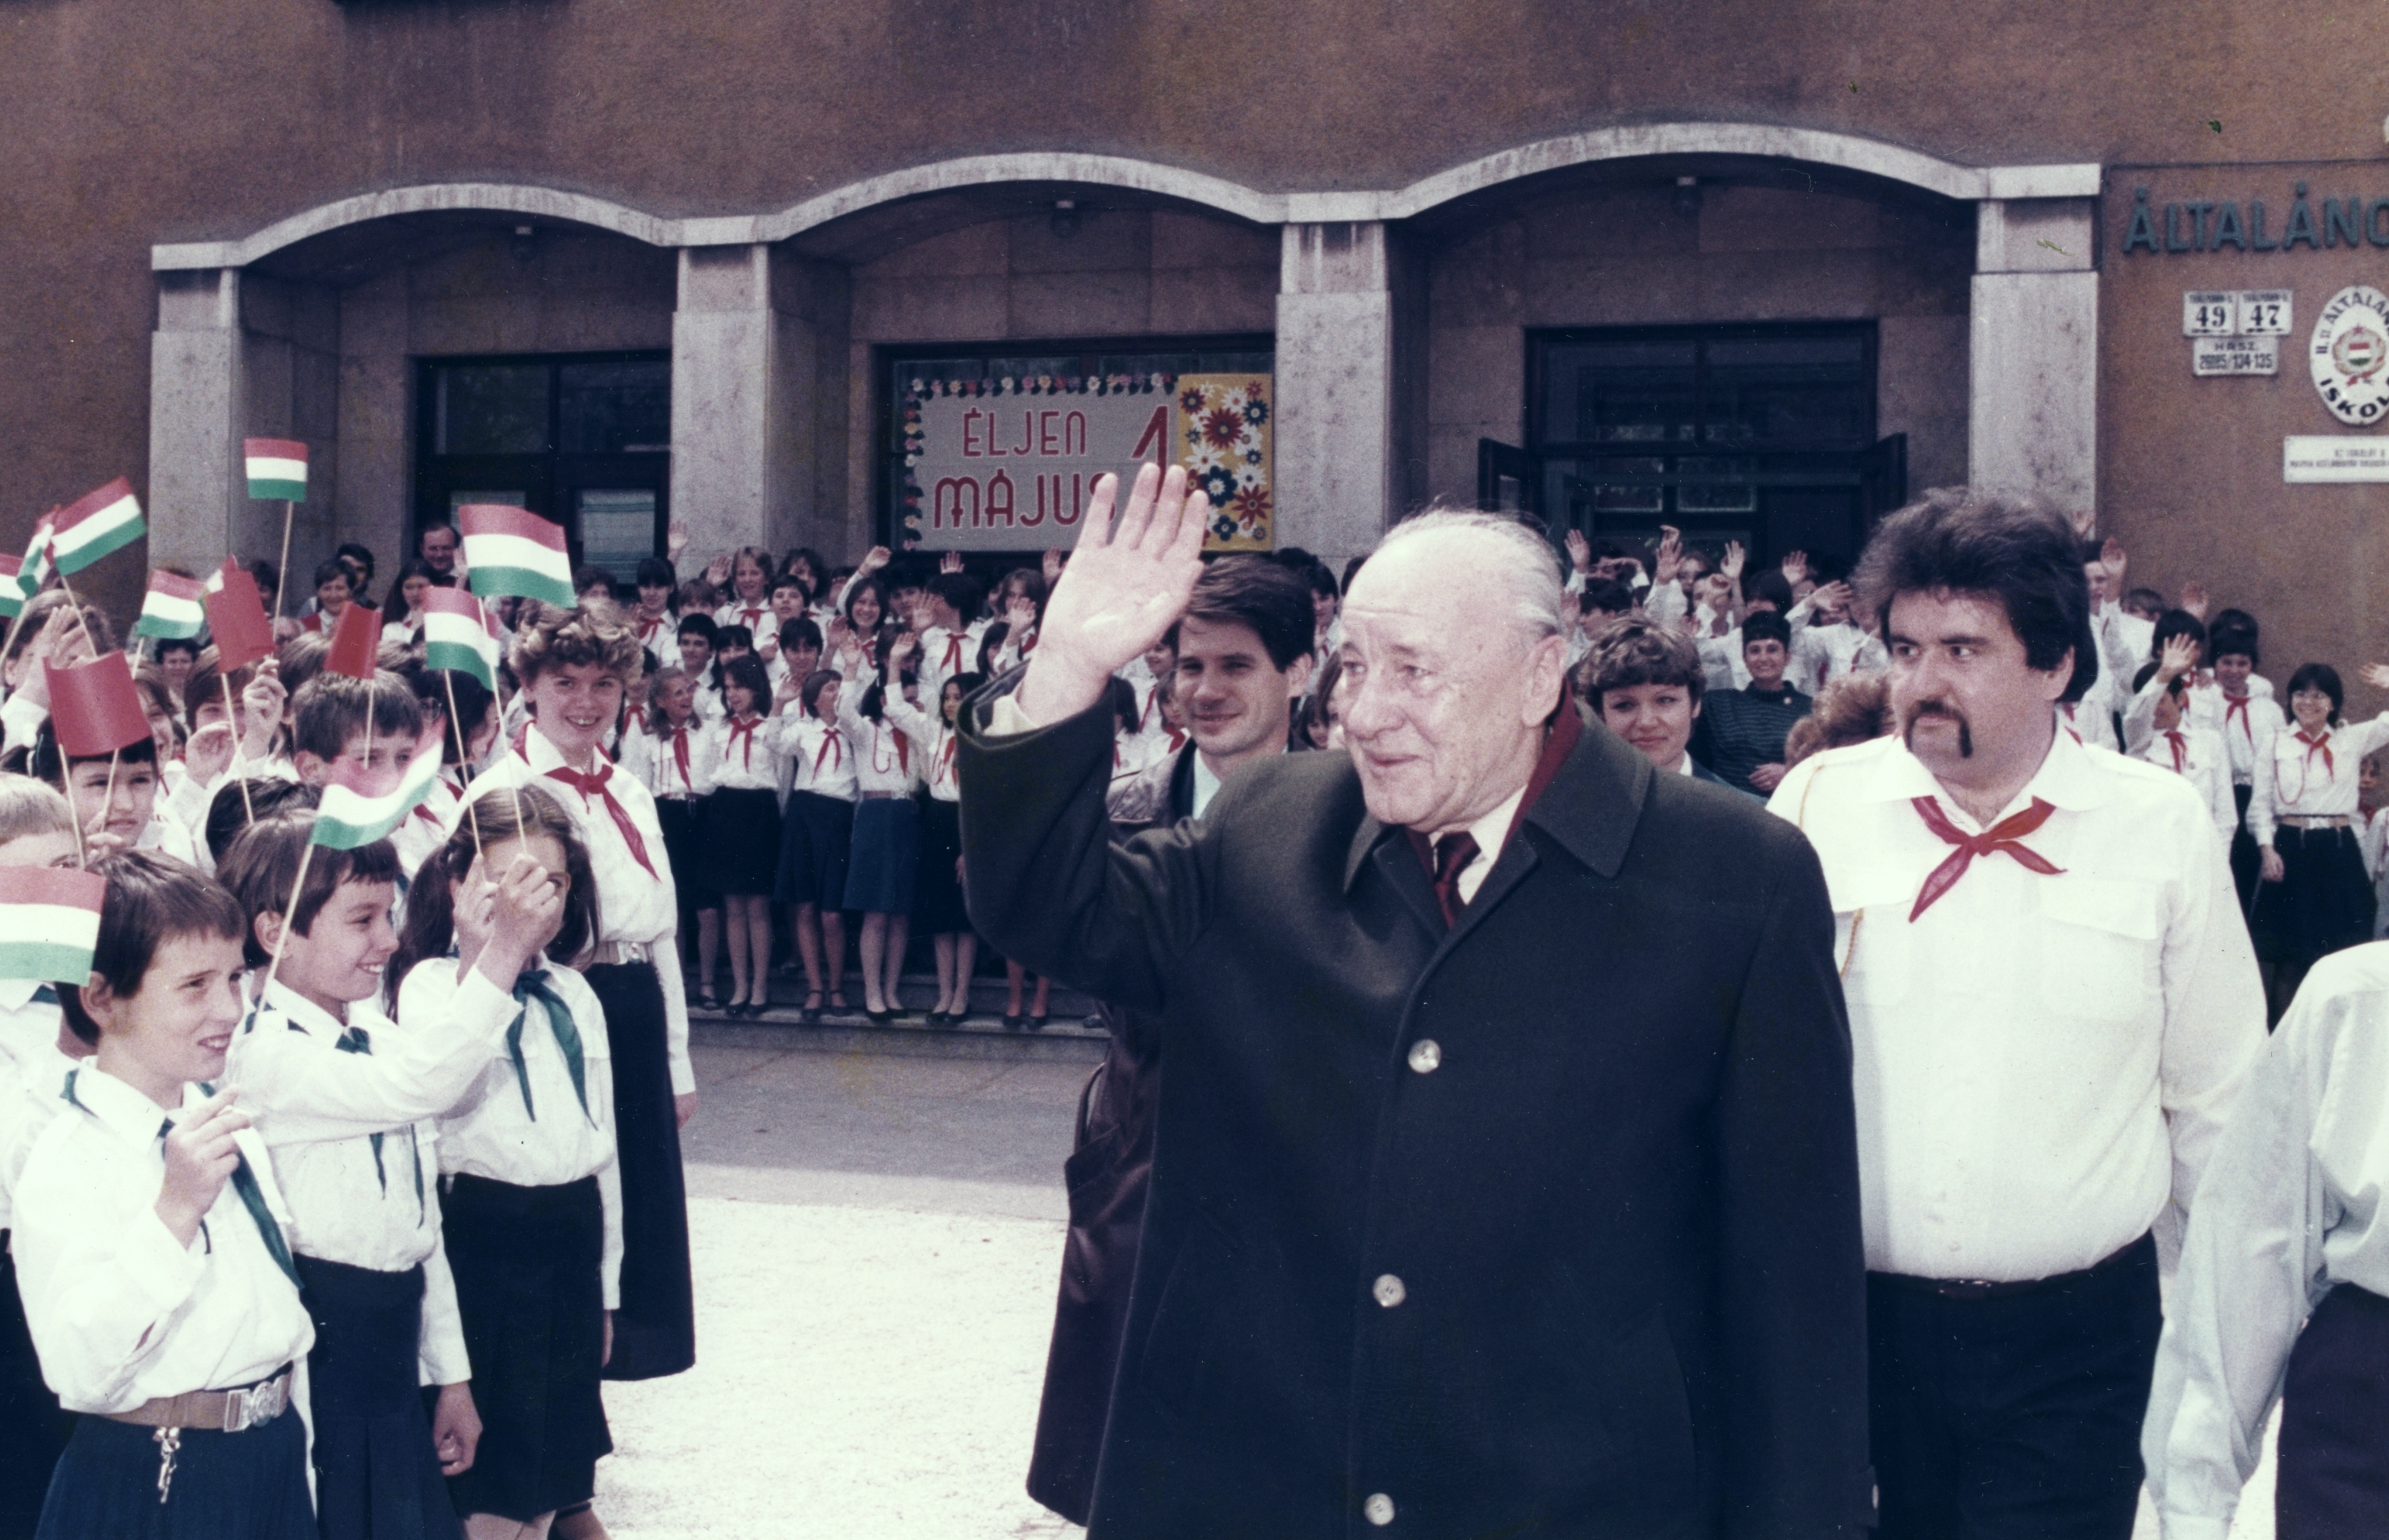 János Kádár visiting schoolchildren in Budapest in 1985.